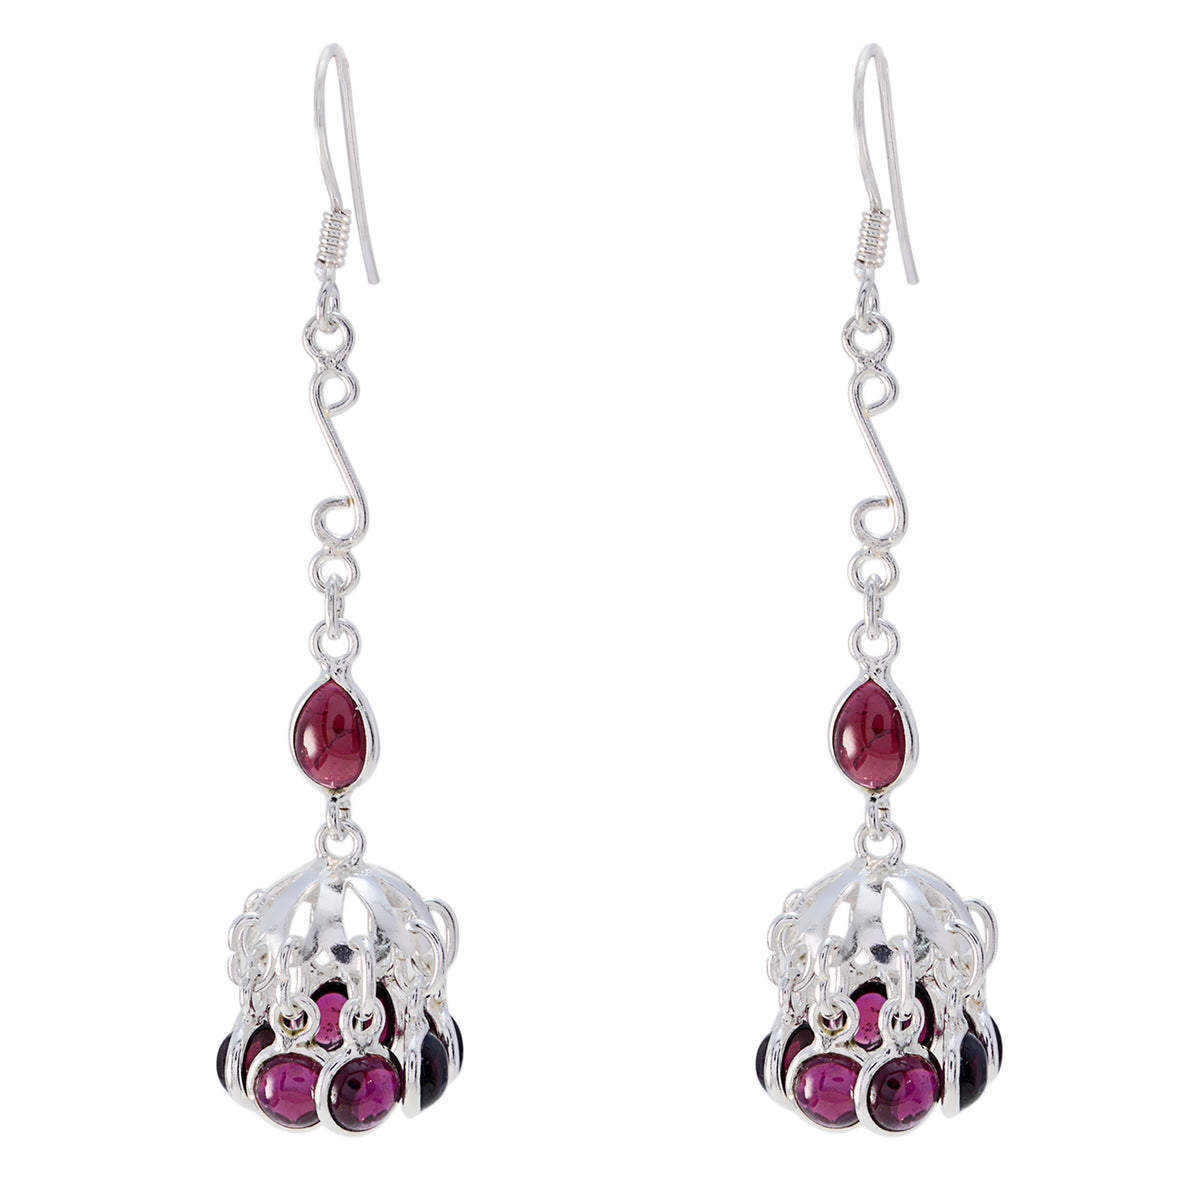 Riyo Good Gemstones multi shape Cabochon Red Garnet Silver Earrings gift for engagement